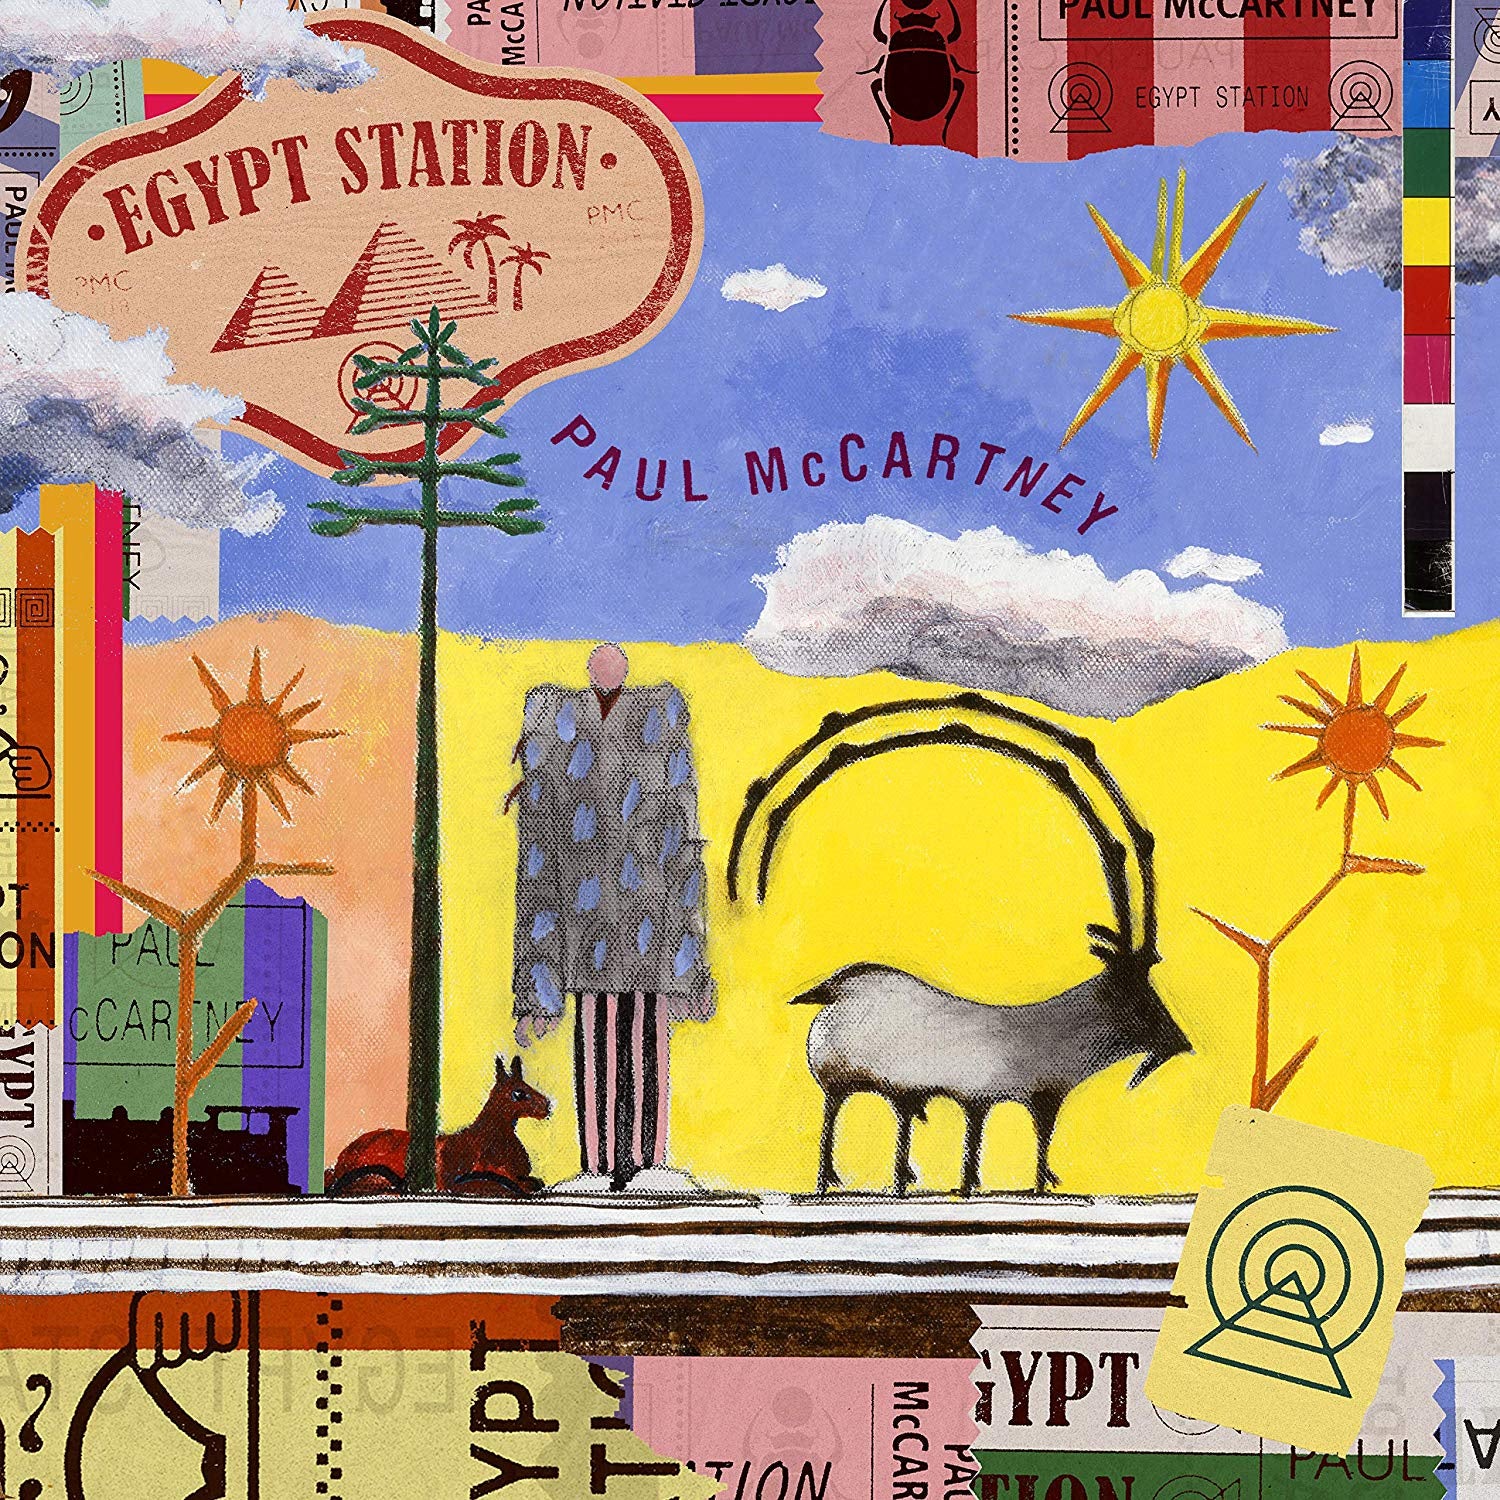 Paul McCartney - Egypt Station - New 2 LP Record 2018 MPL Capitol Vinyl - Pop Rock